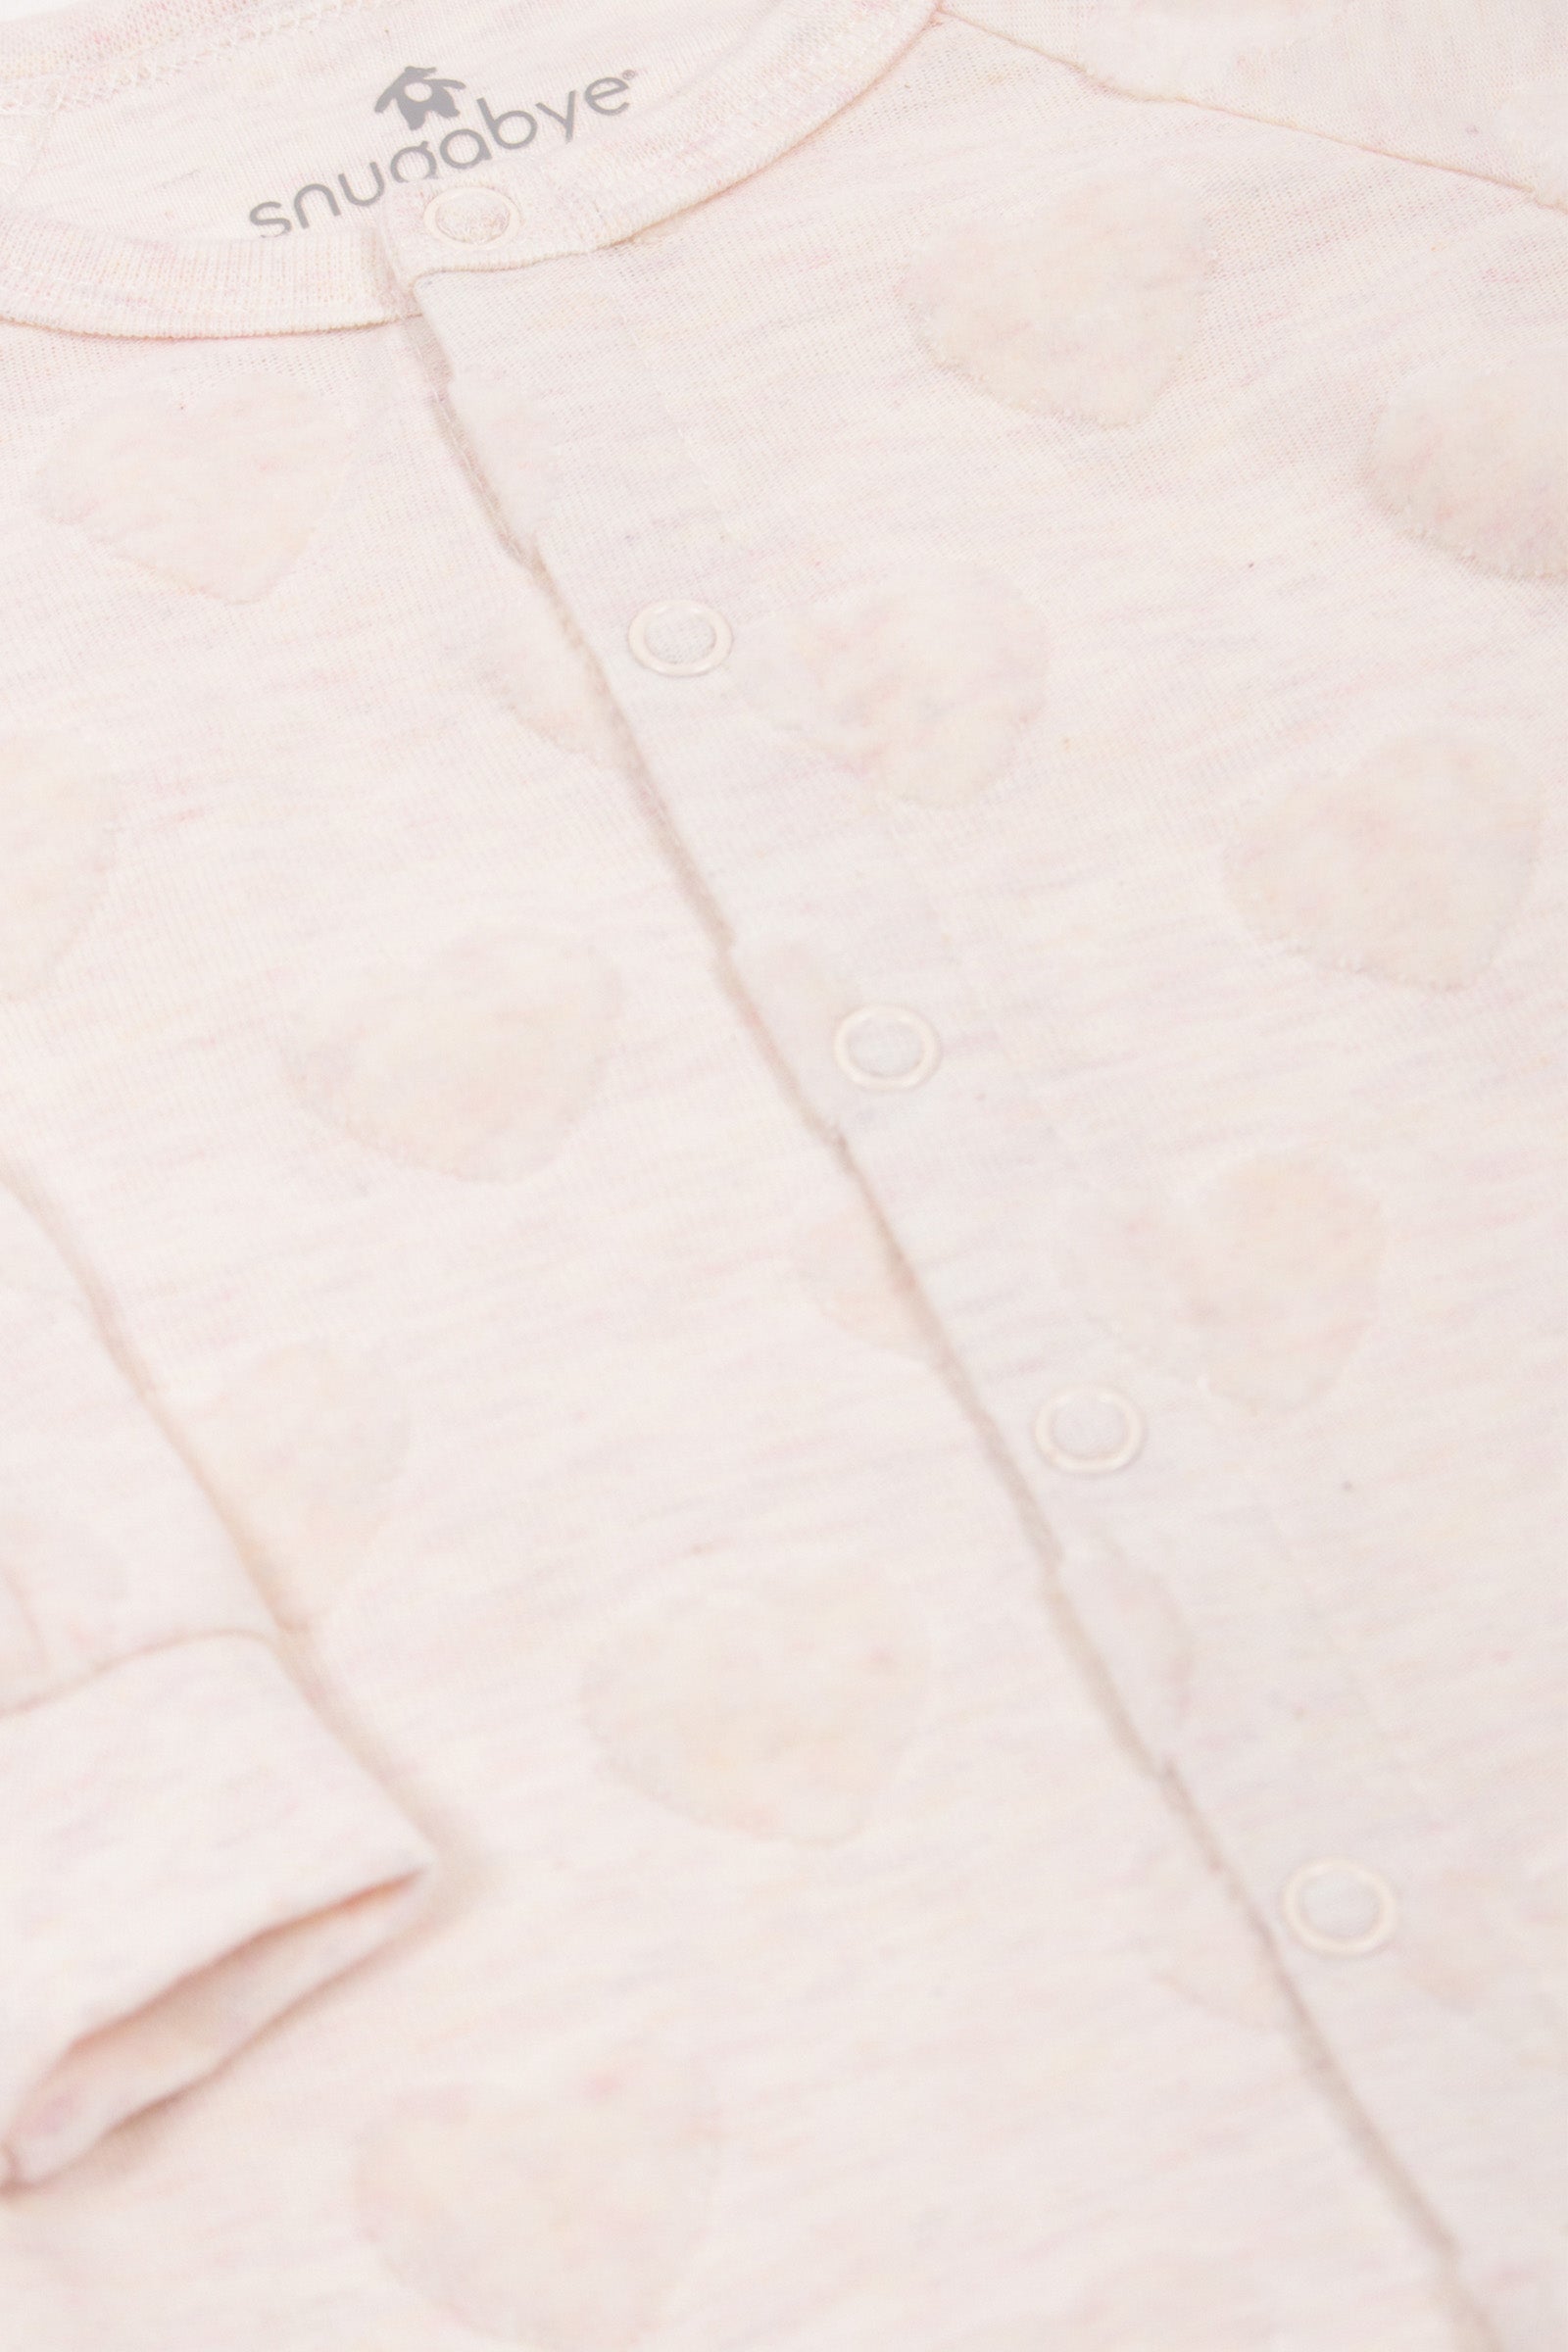 Snugabye Dream 2-Piece Velour Set - Pink Hearts